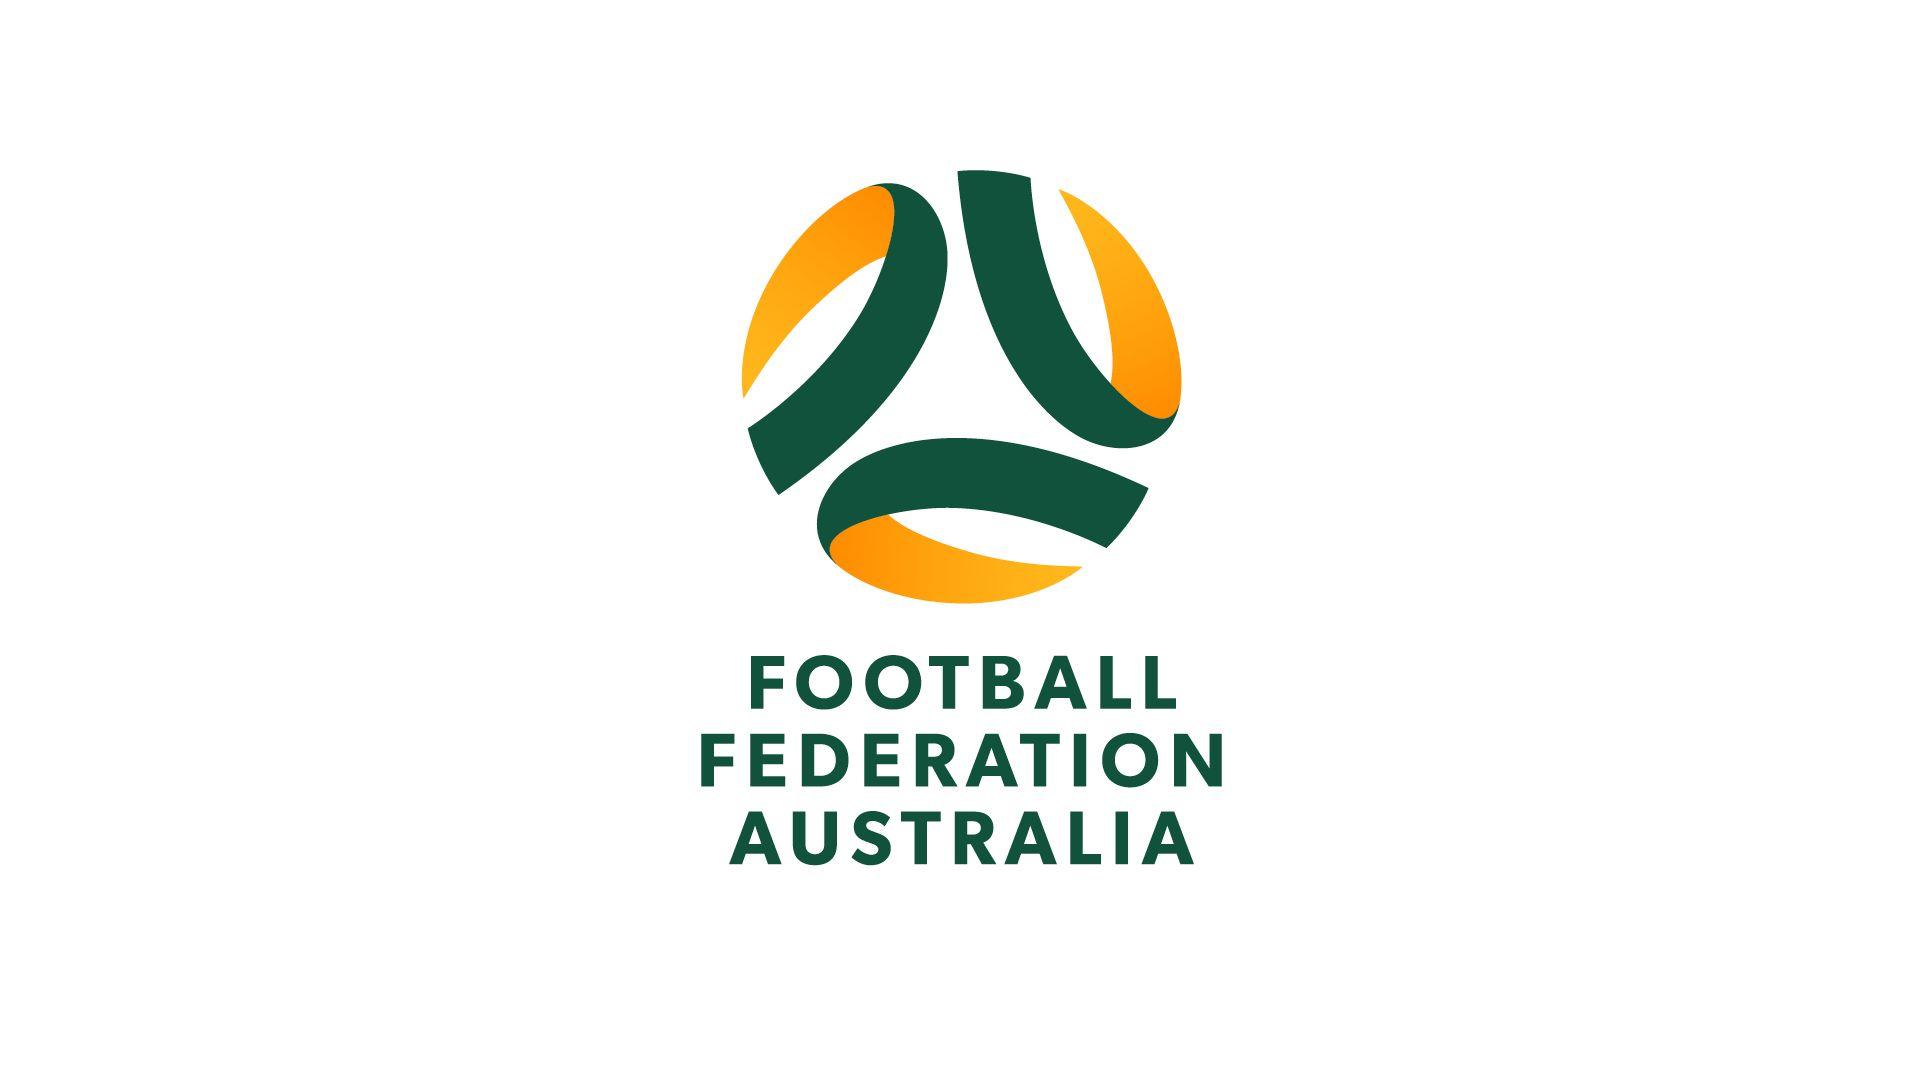 Socceroos Logo - Football Federation of Australia reveals rebrand as part of a new